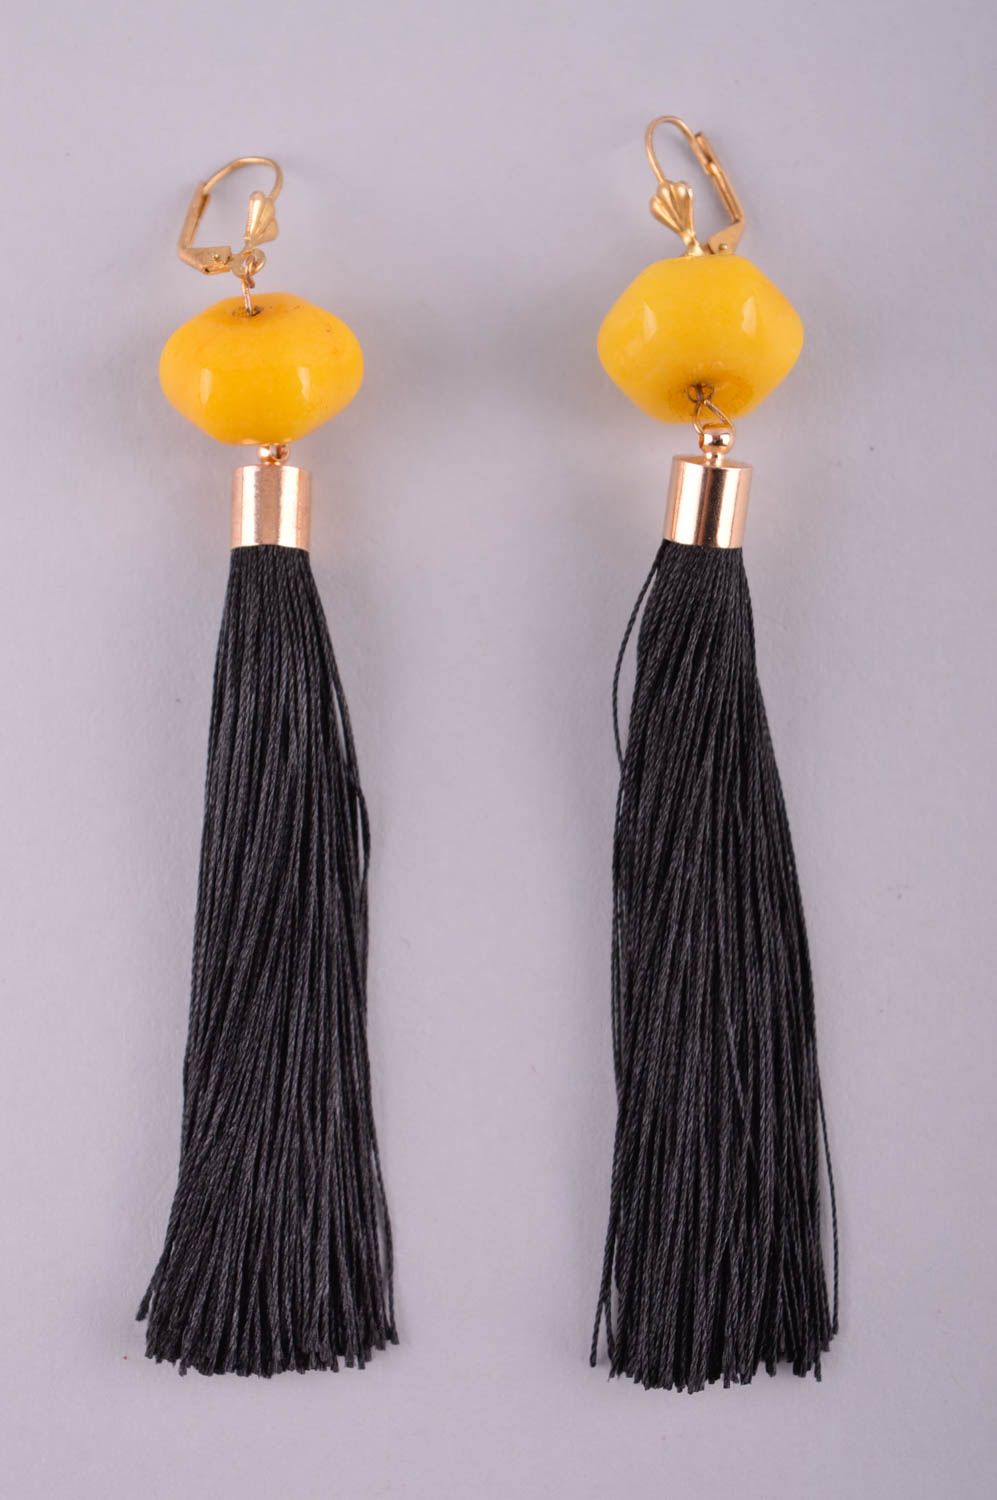 Handmade wicker earrings handmade accessories long earrings black and yellow  photo 3